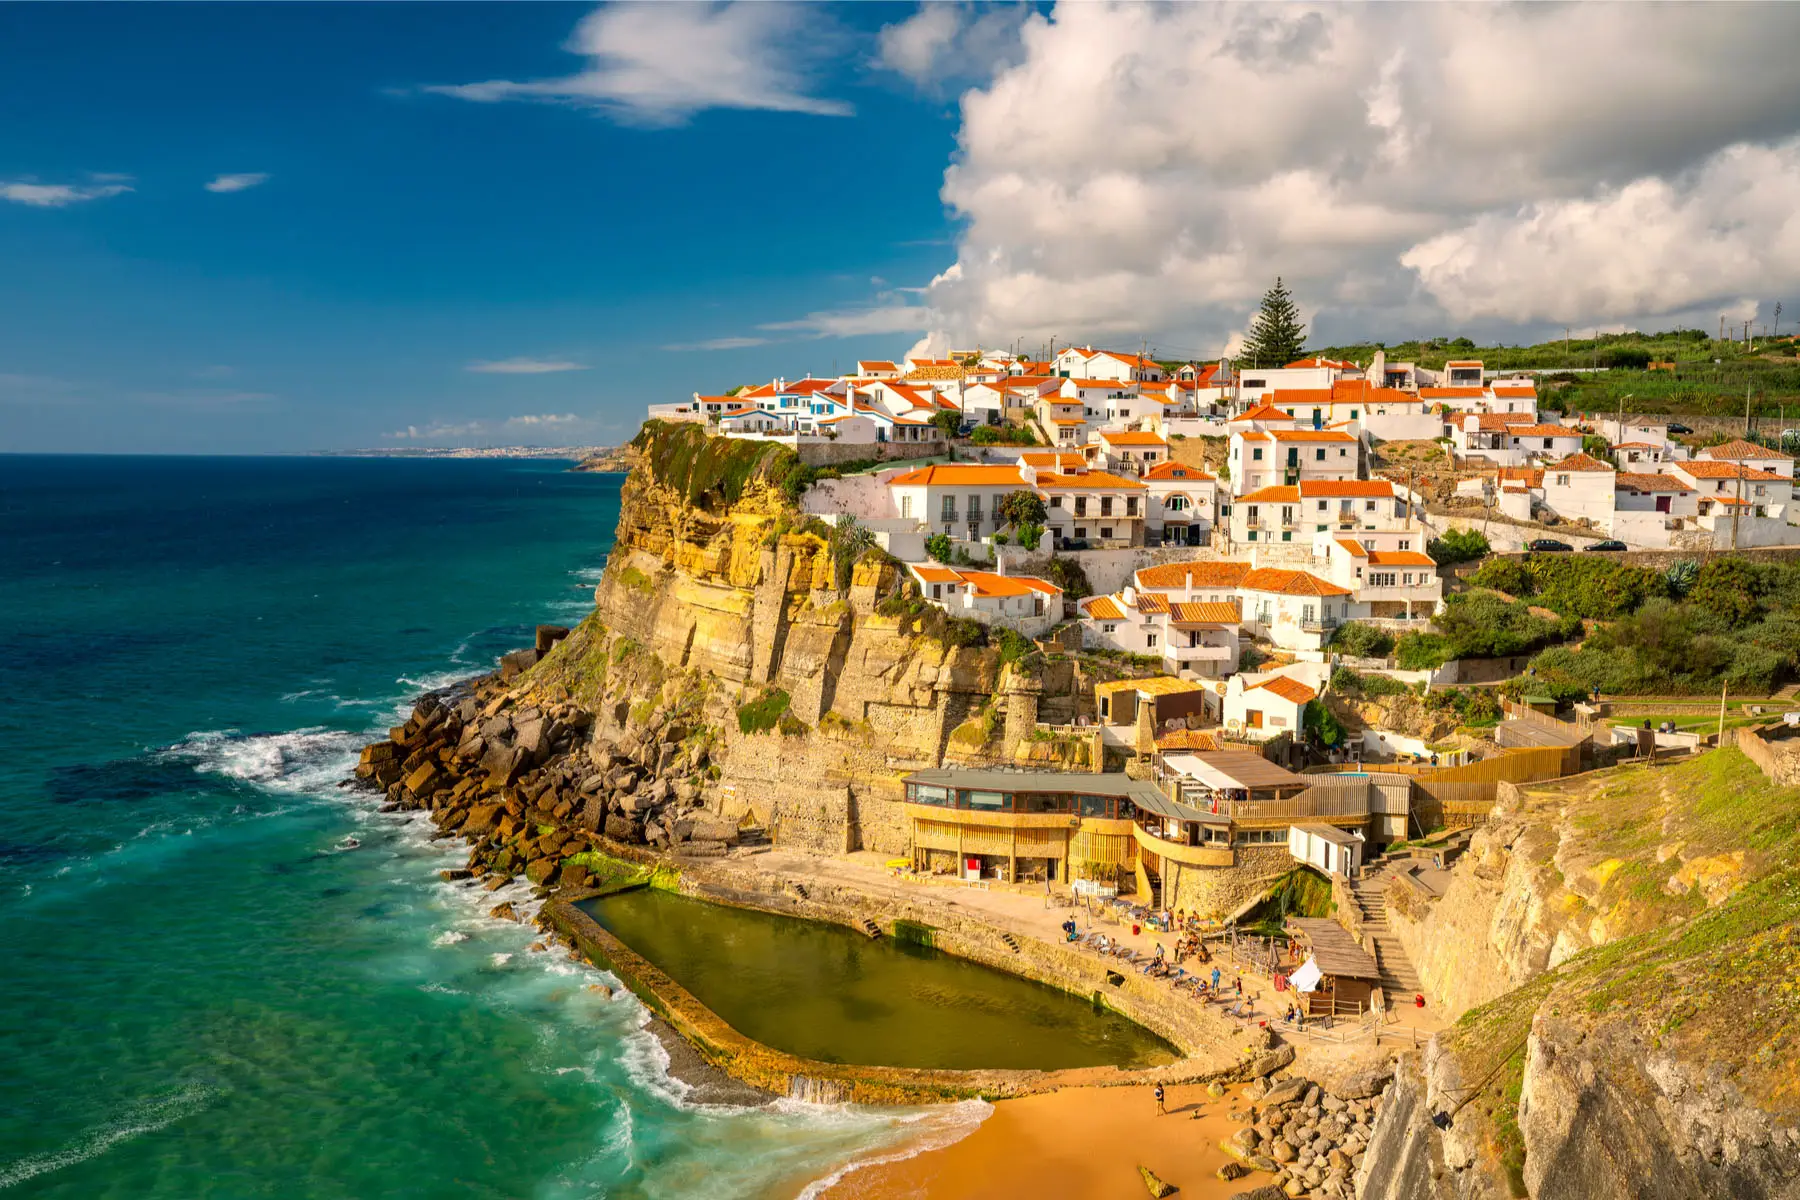 seaside town of Azenhas do Mar in Portugal